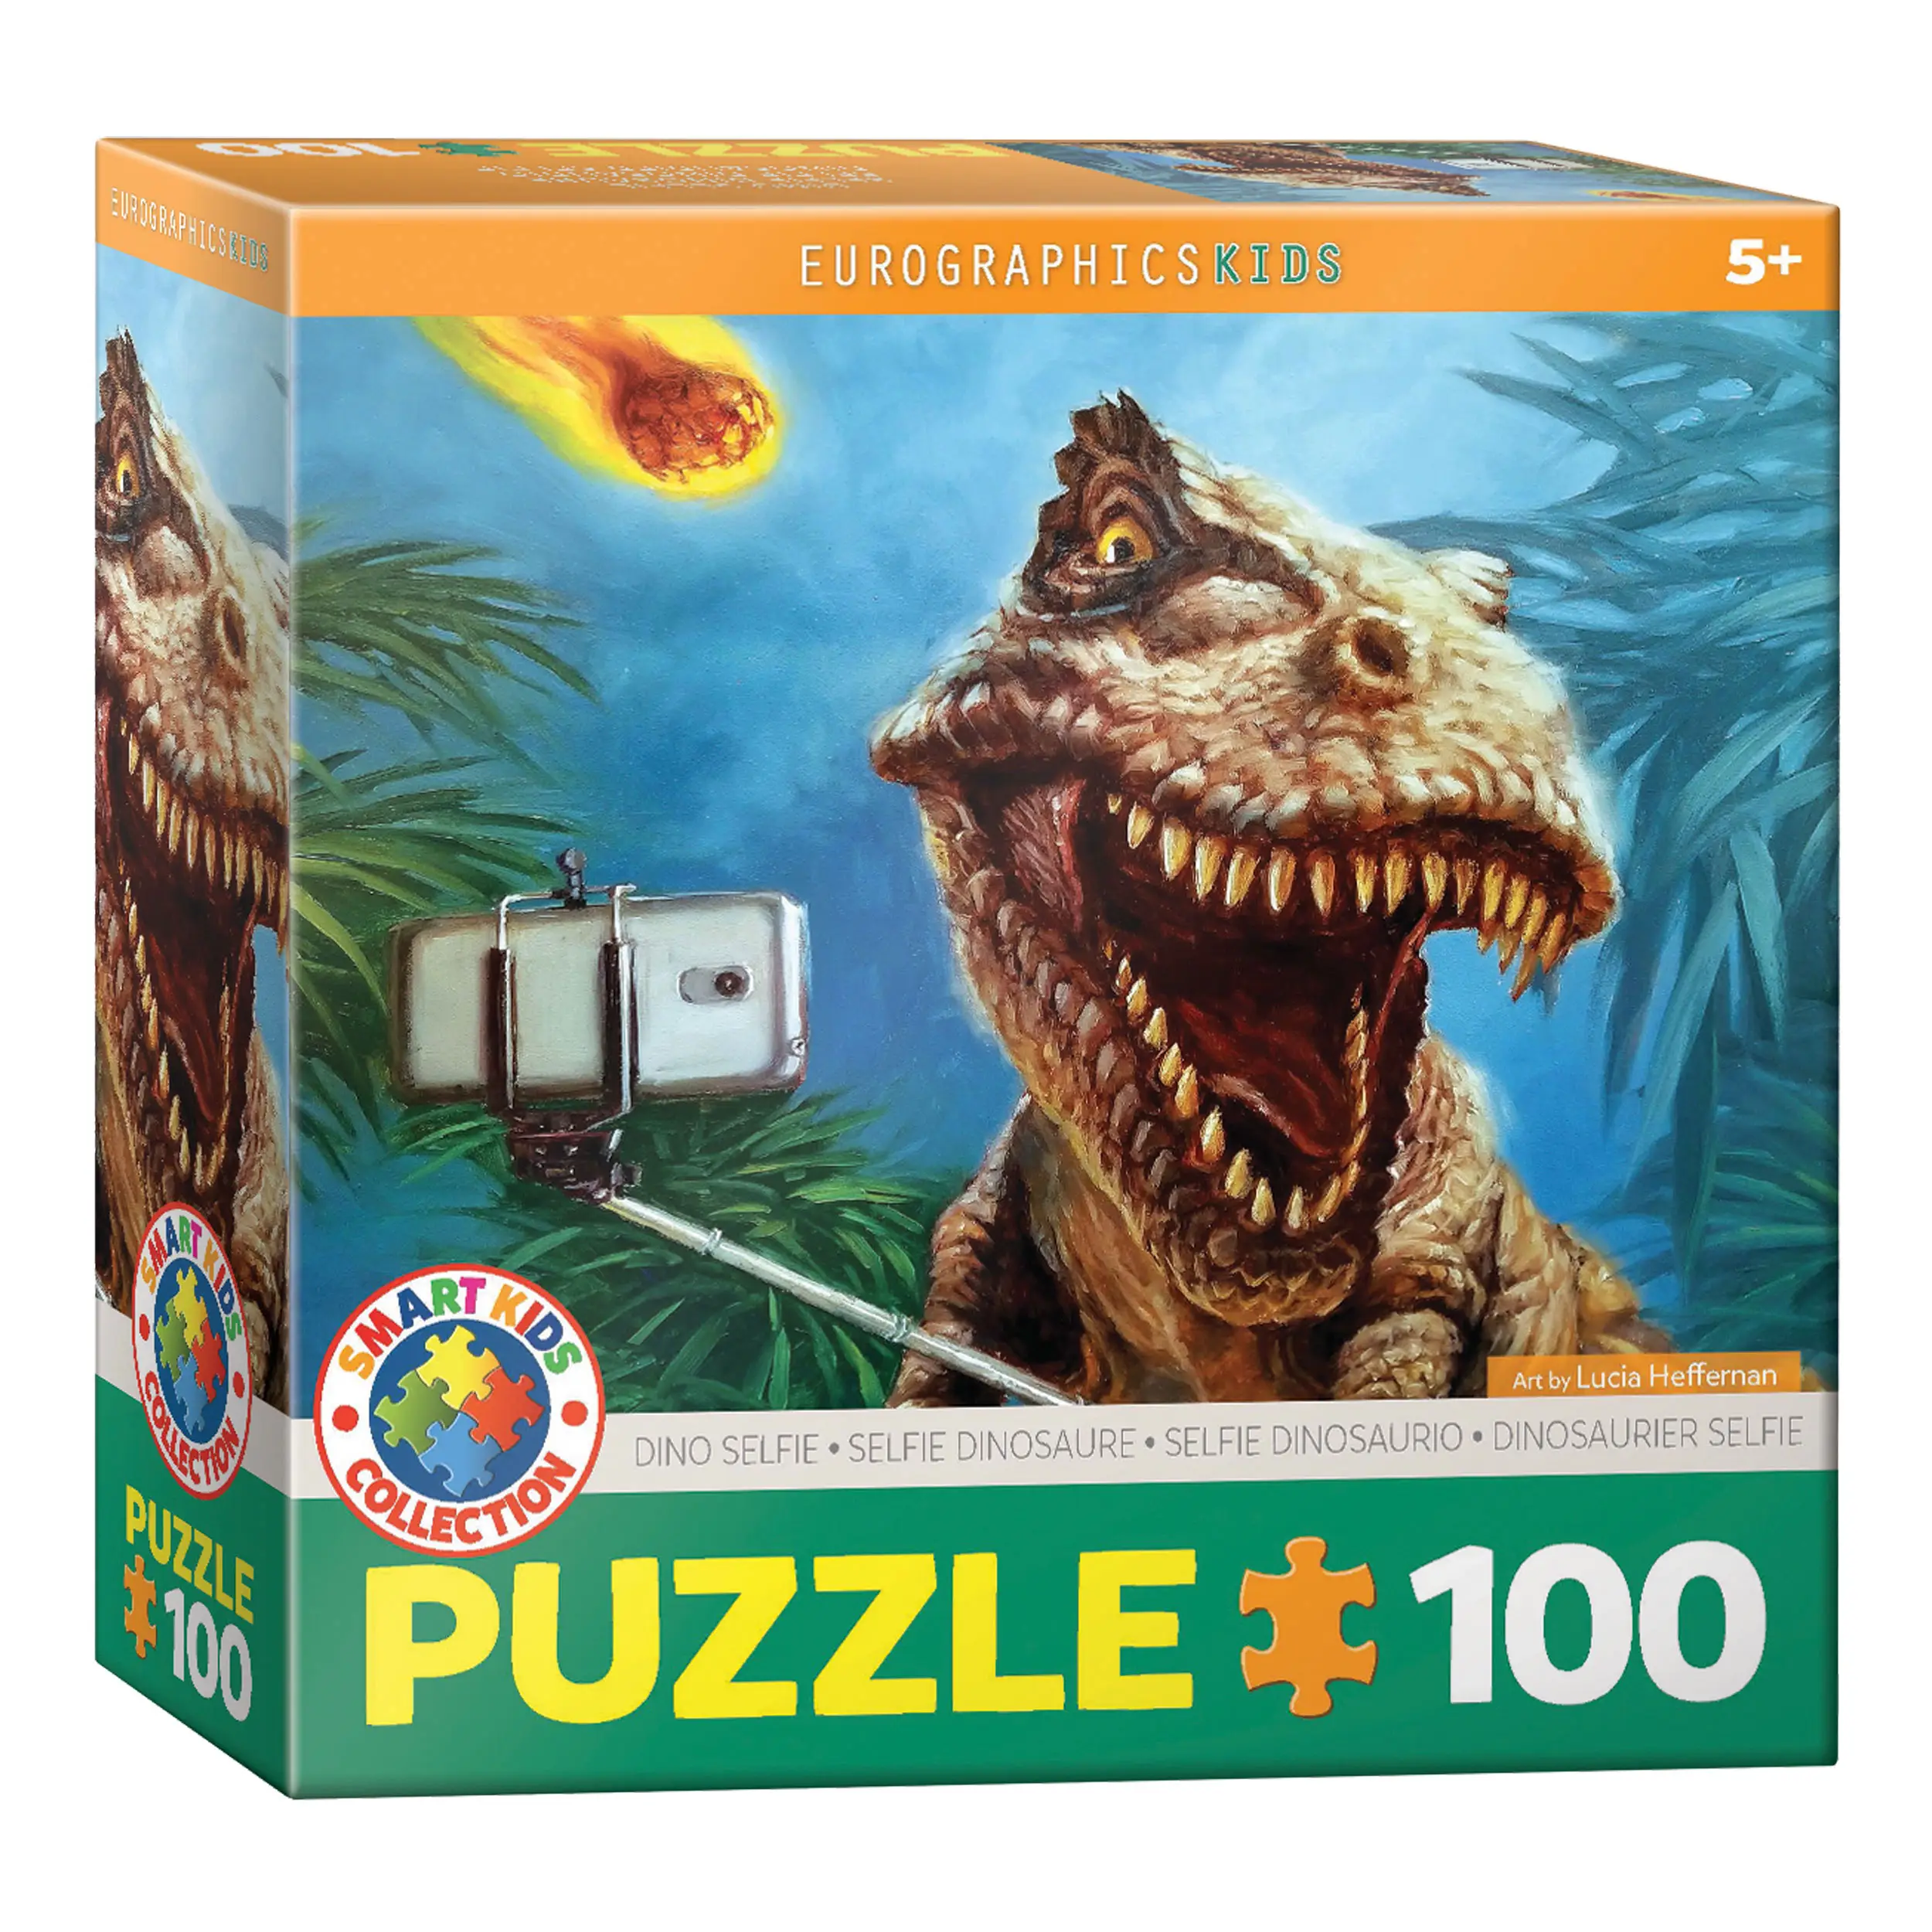 Puzzle Dinosaurier Selfie - Heffernan